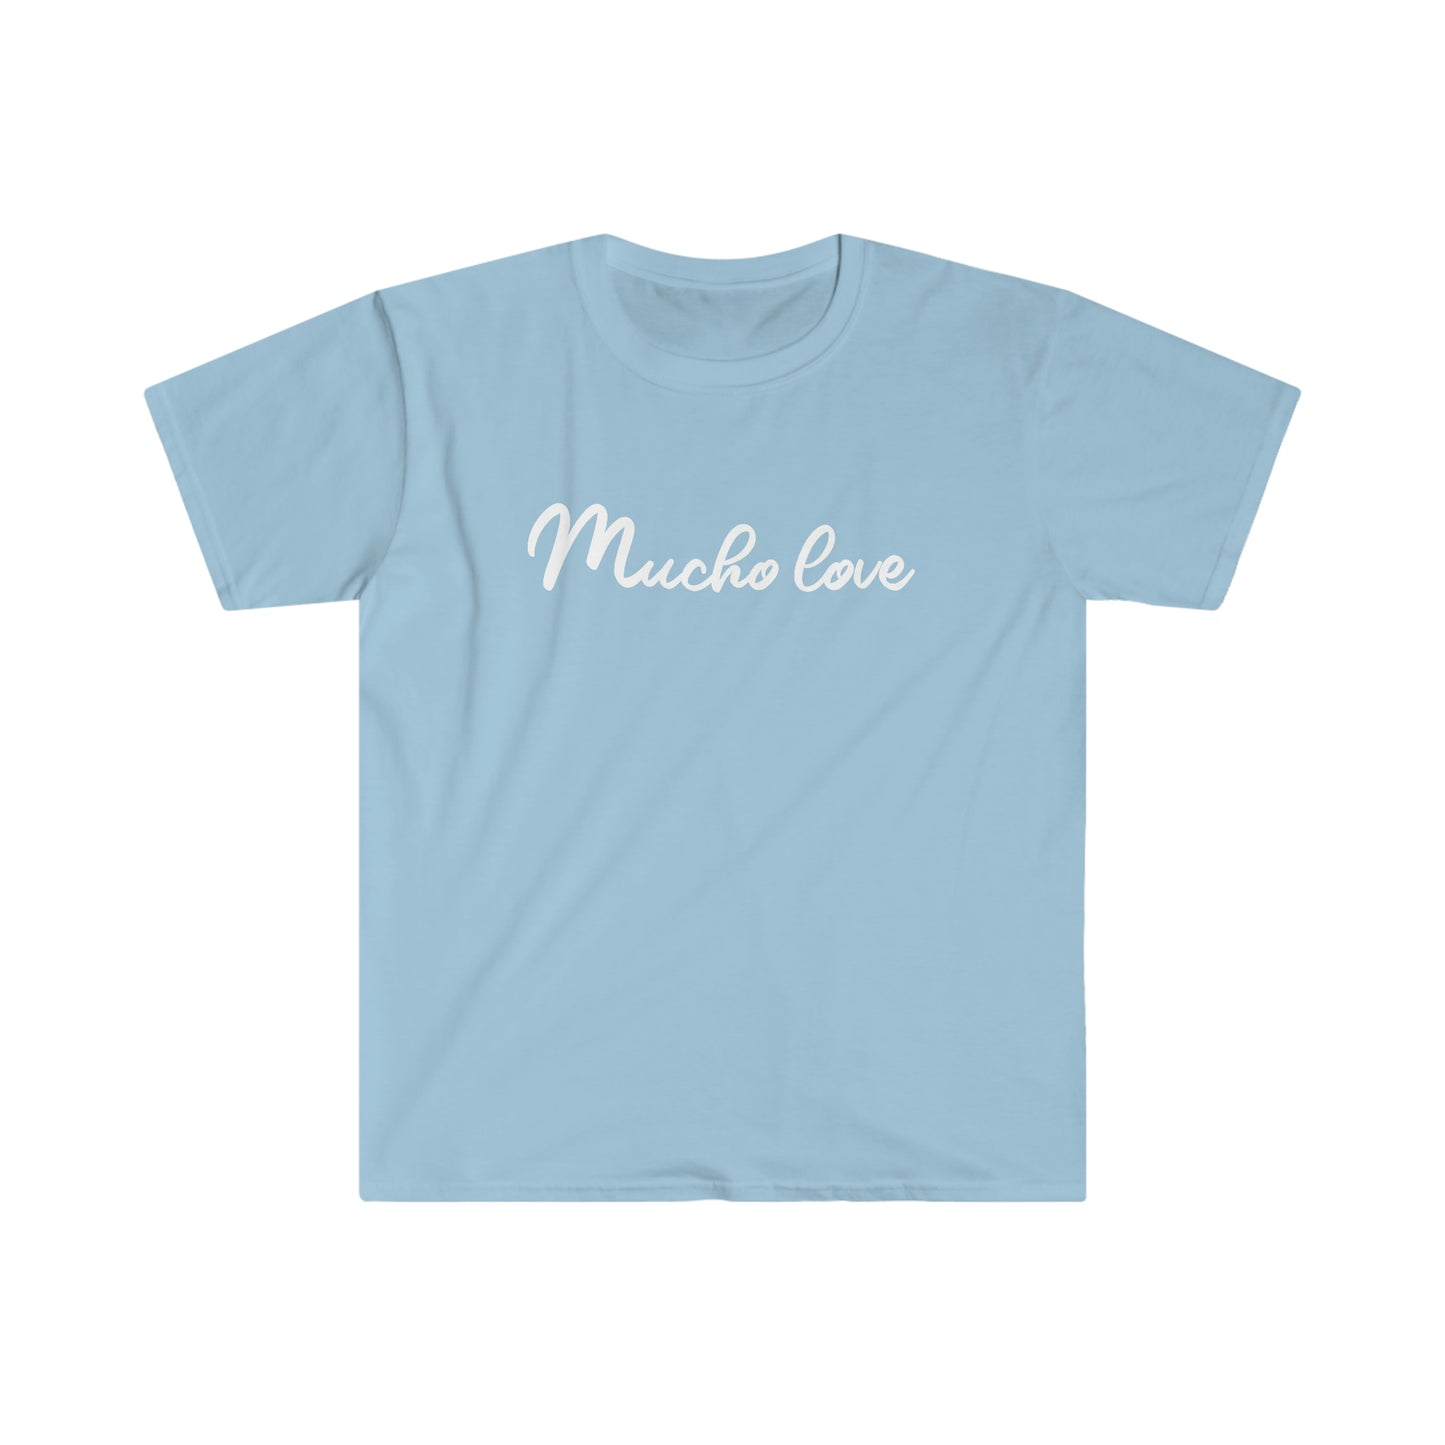 Mucho Love T-Shirt